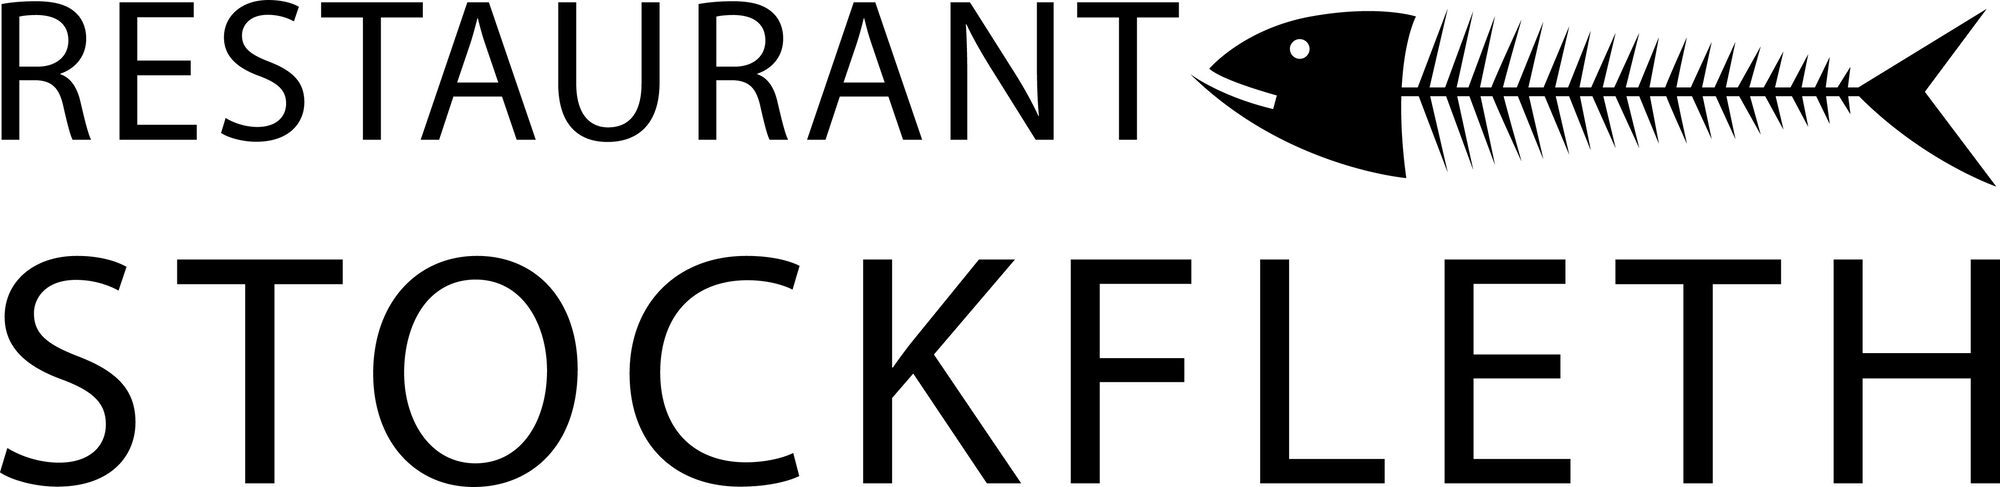 landing-page-stockfleth-logo-1